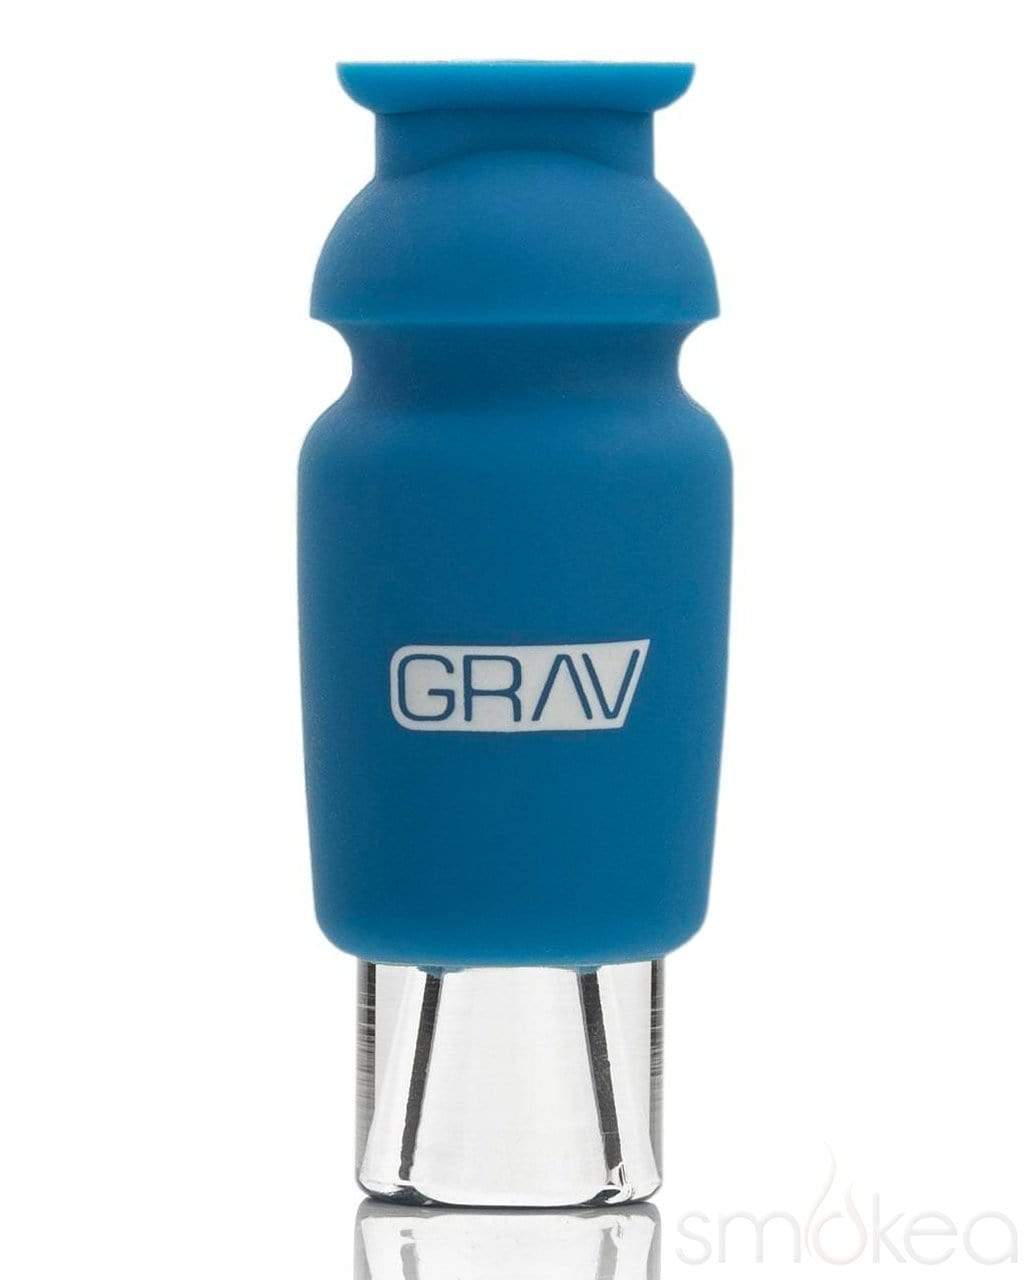 GRAV Silicone Capped Glass Crutch Blue